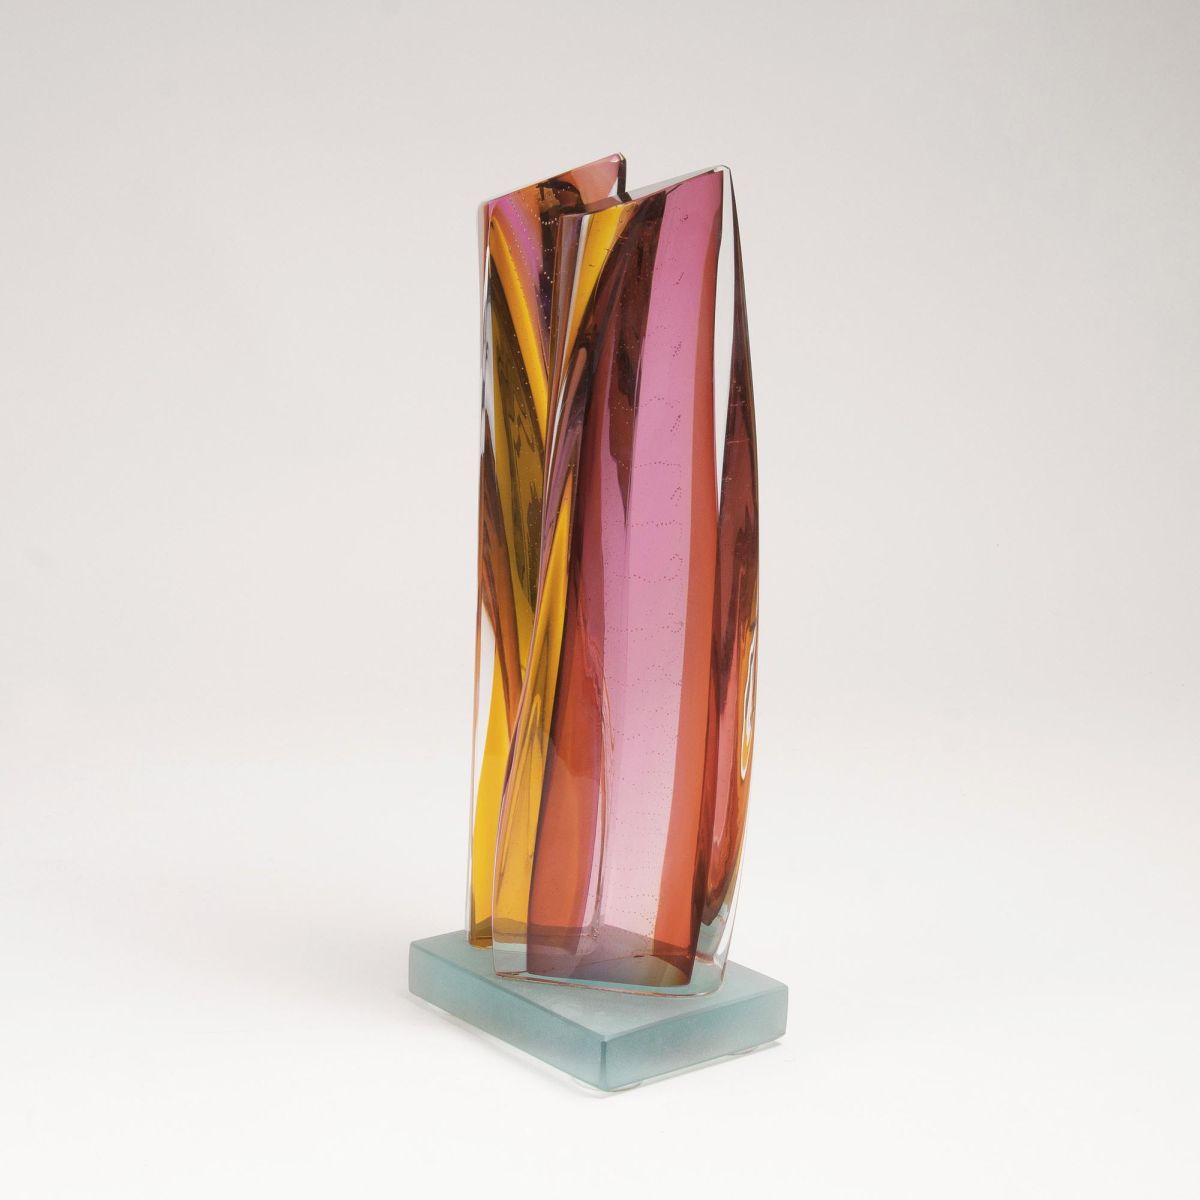 An Unique Glass Sculpture for Kosta Boda